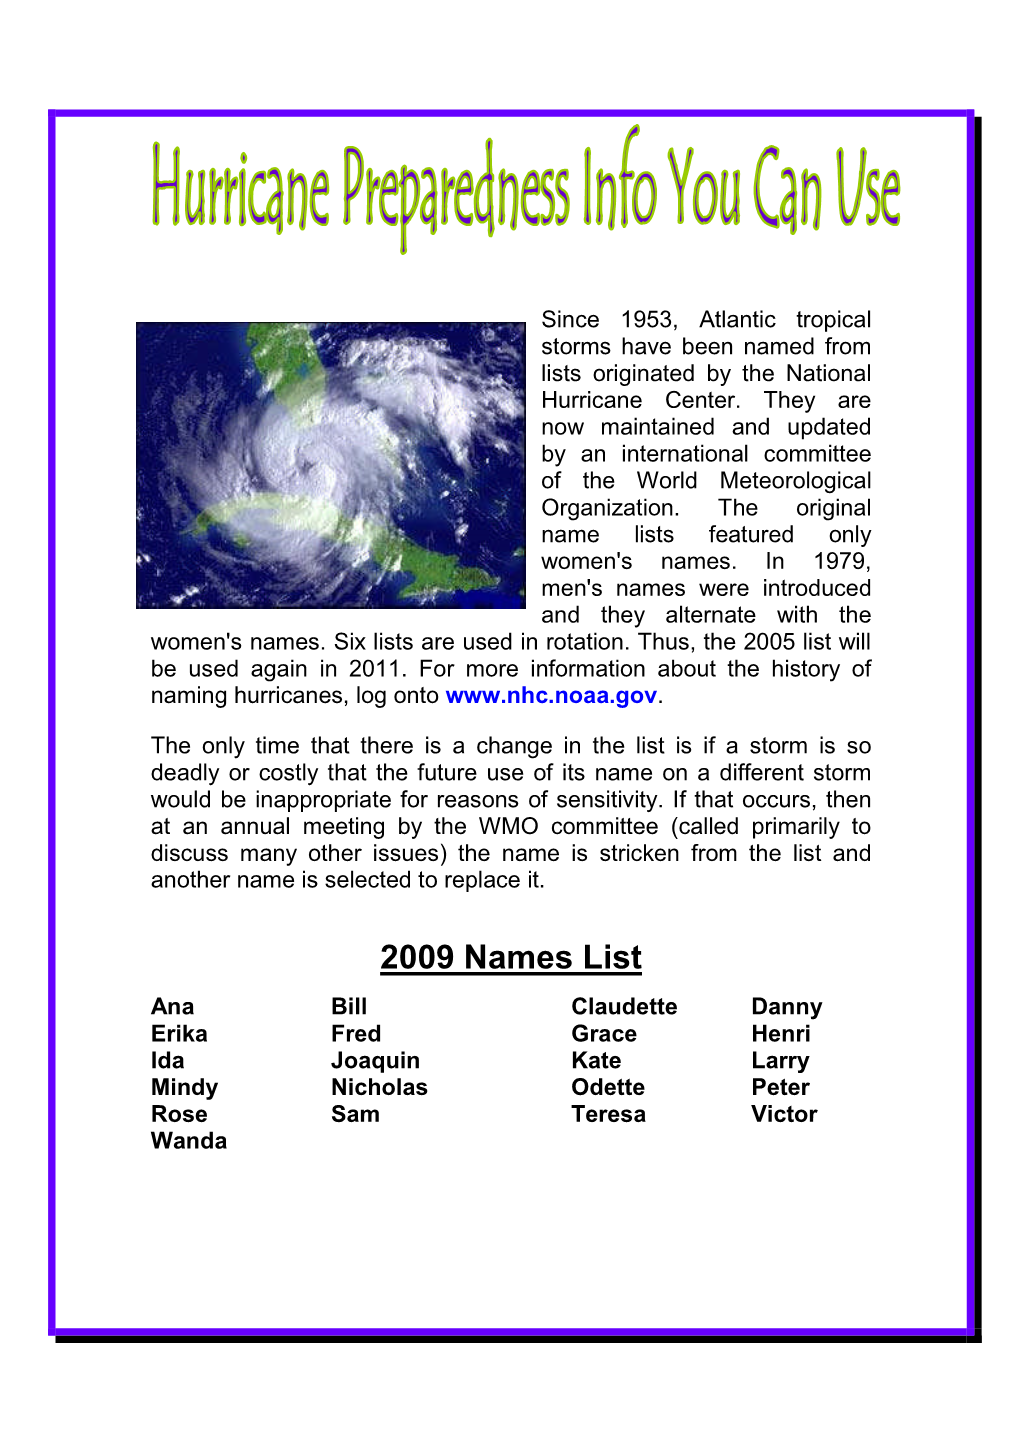 Hurricane Info You Can Use- 2009